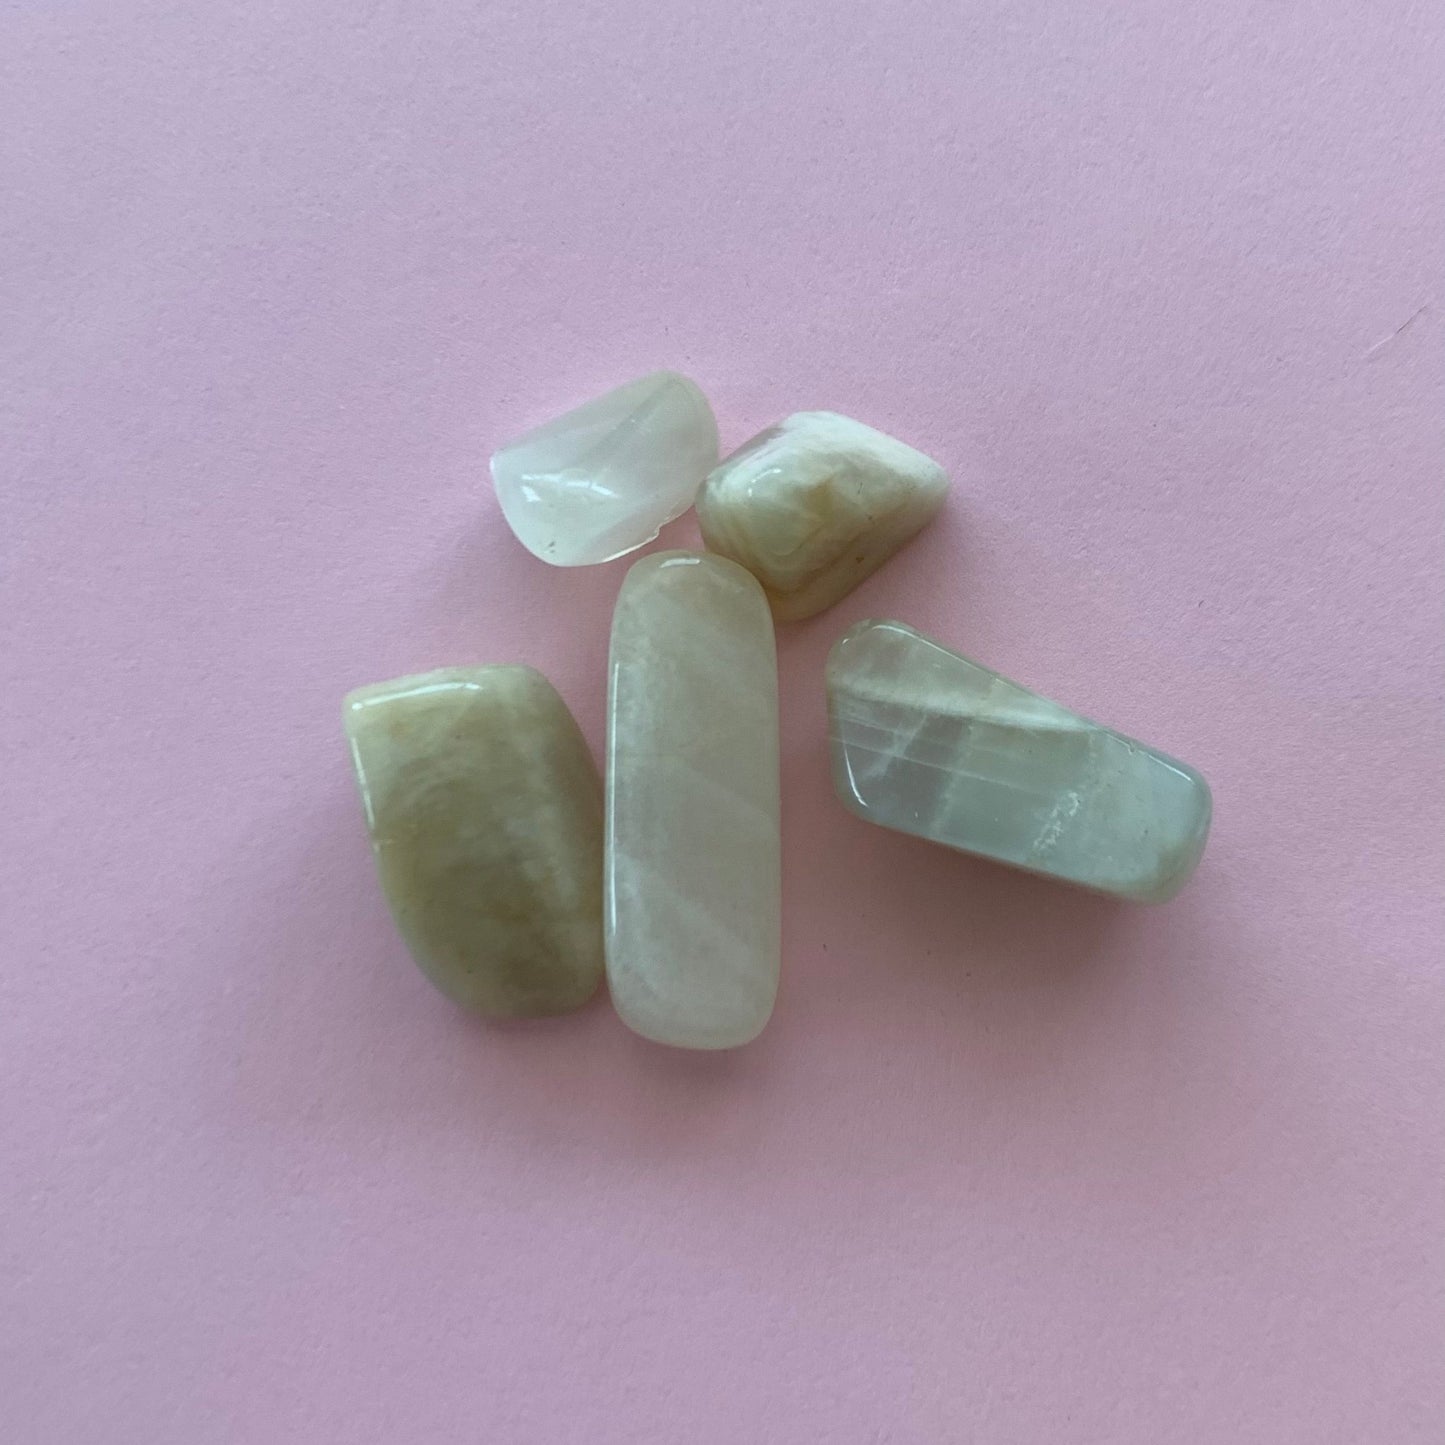 Moonstone Tumble - Conscious Crystals New Zealand Crystal and Spiritual Shop